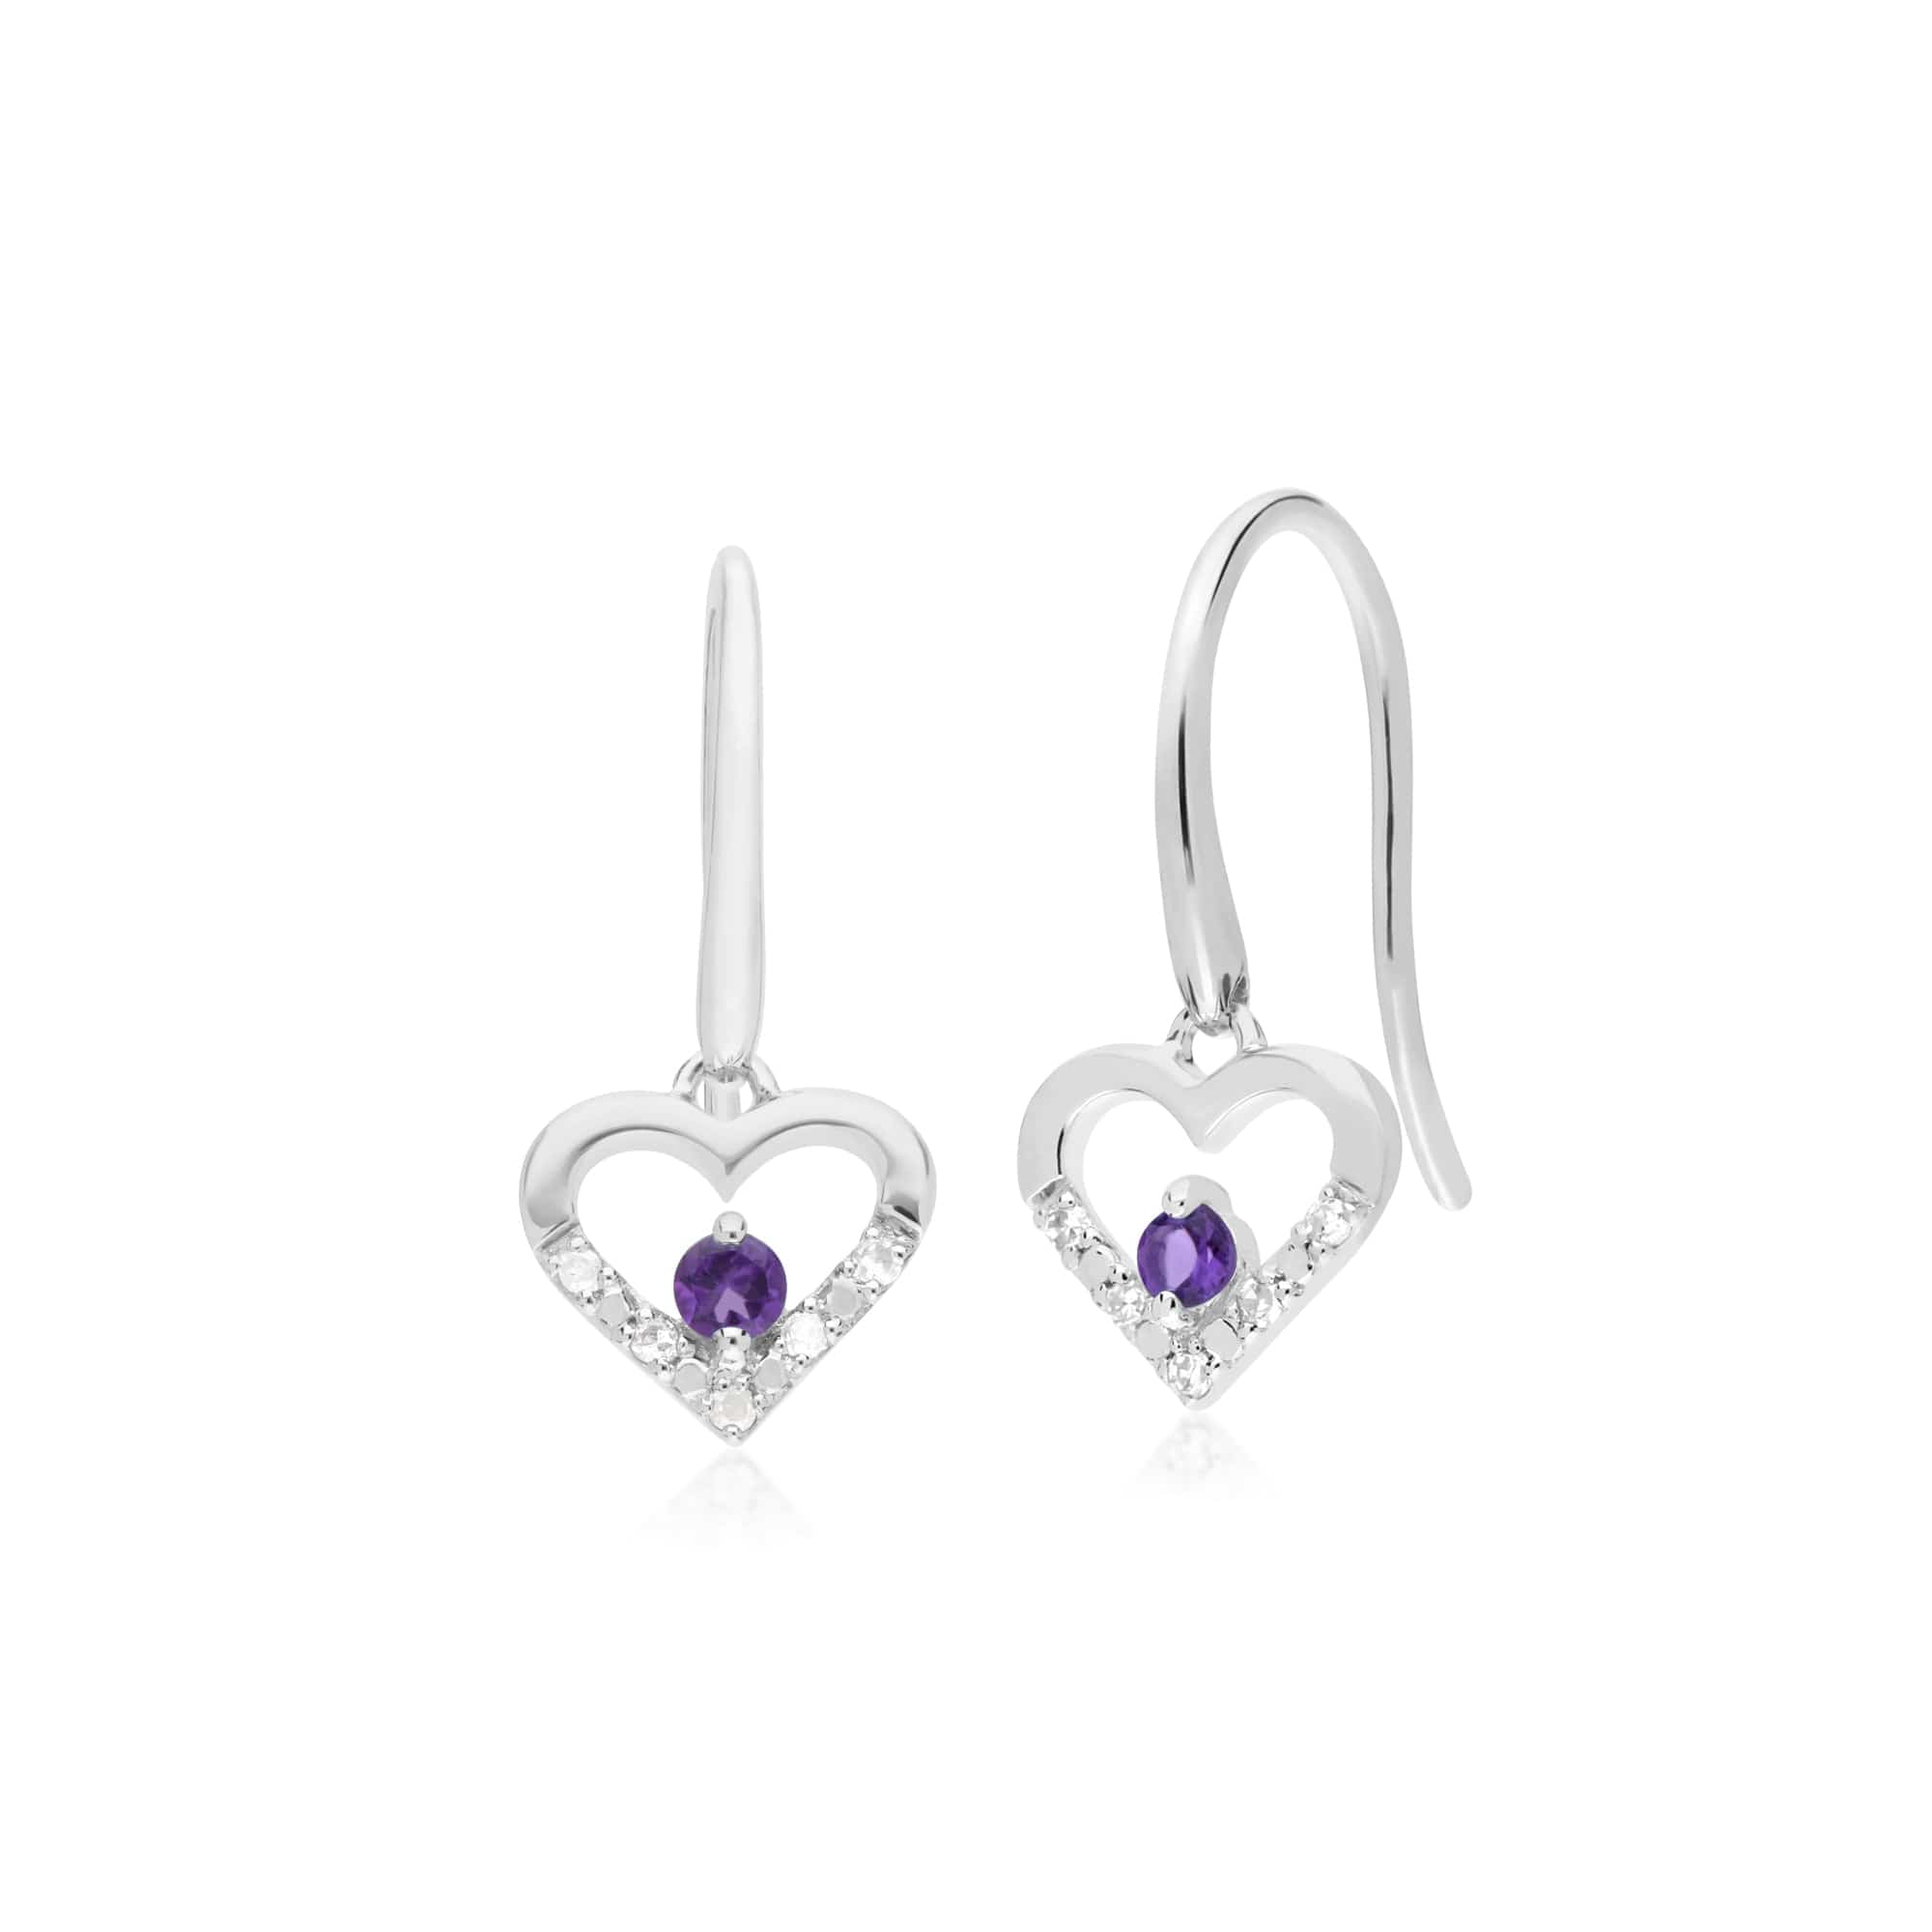 162E0258049-162P0219049 Classic Round Amethyst & Diamond Heart Drop Earrings & Pendant Set in 9ct White Gold 2